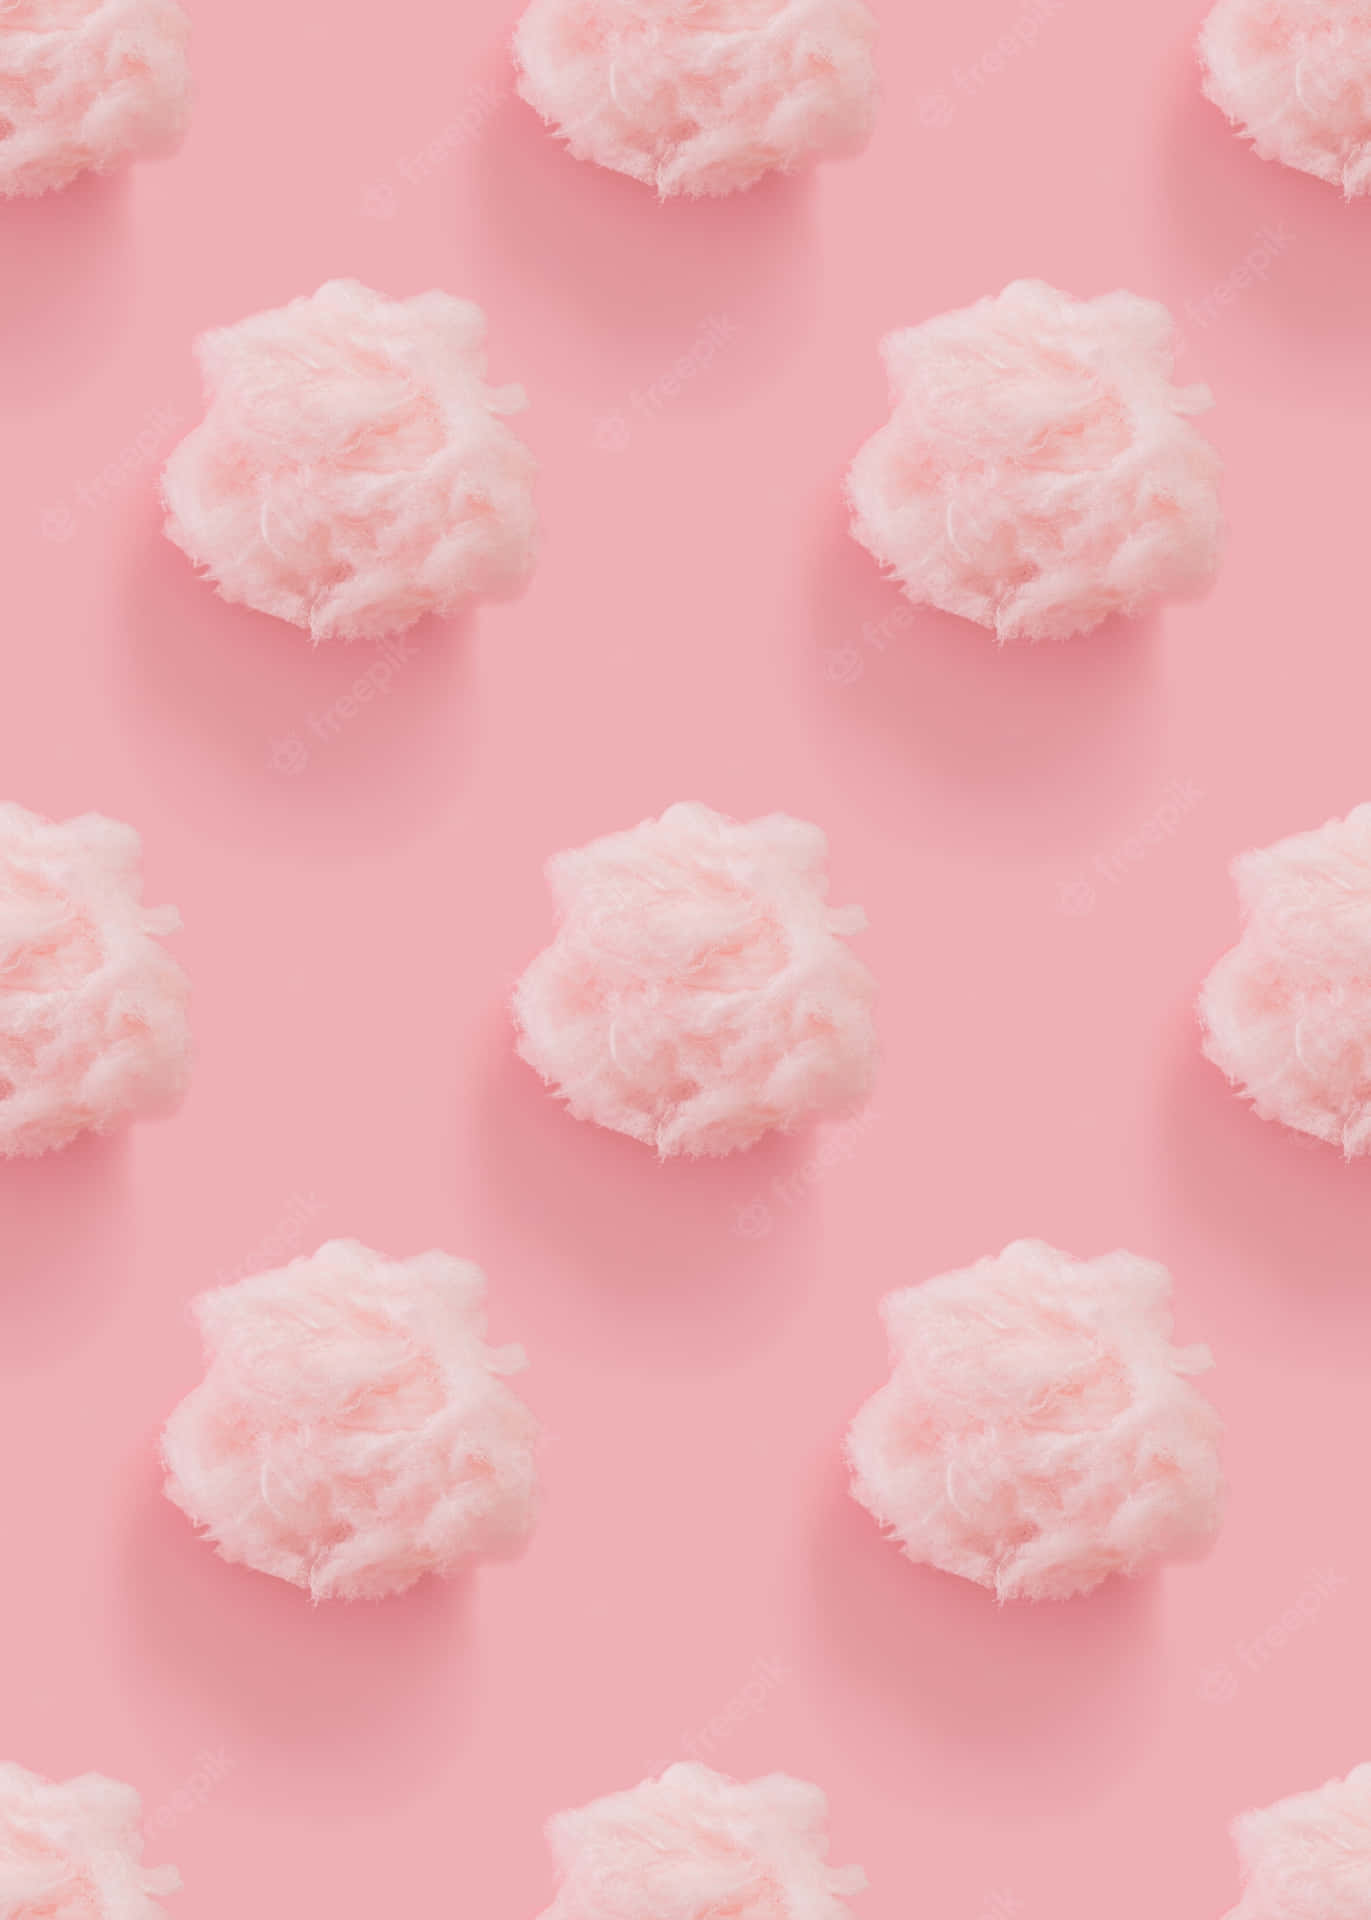 Pink Cotton Candy 2000 X 2800 Wallpaper